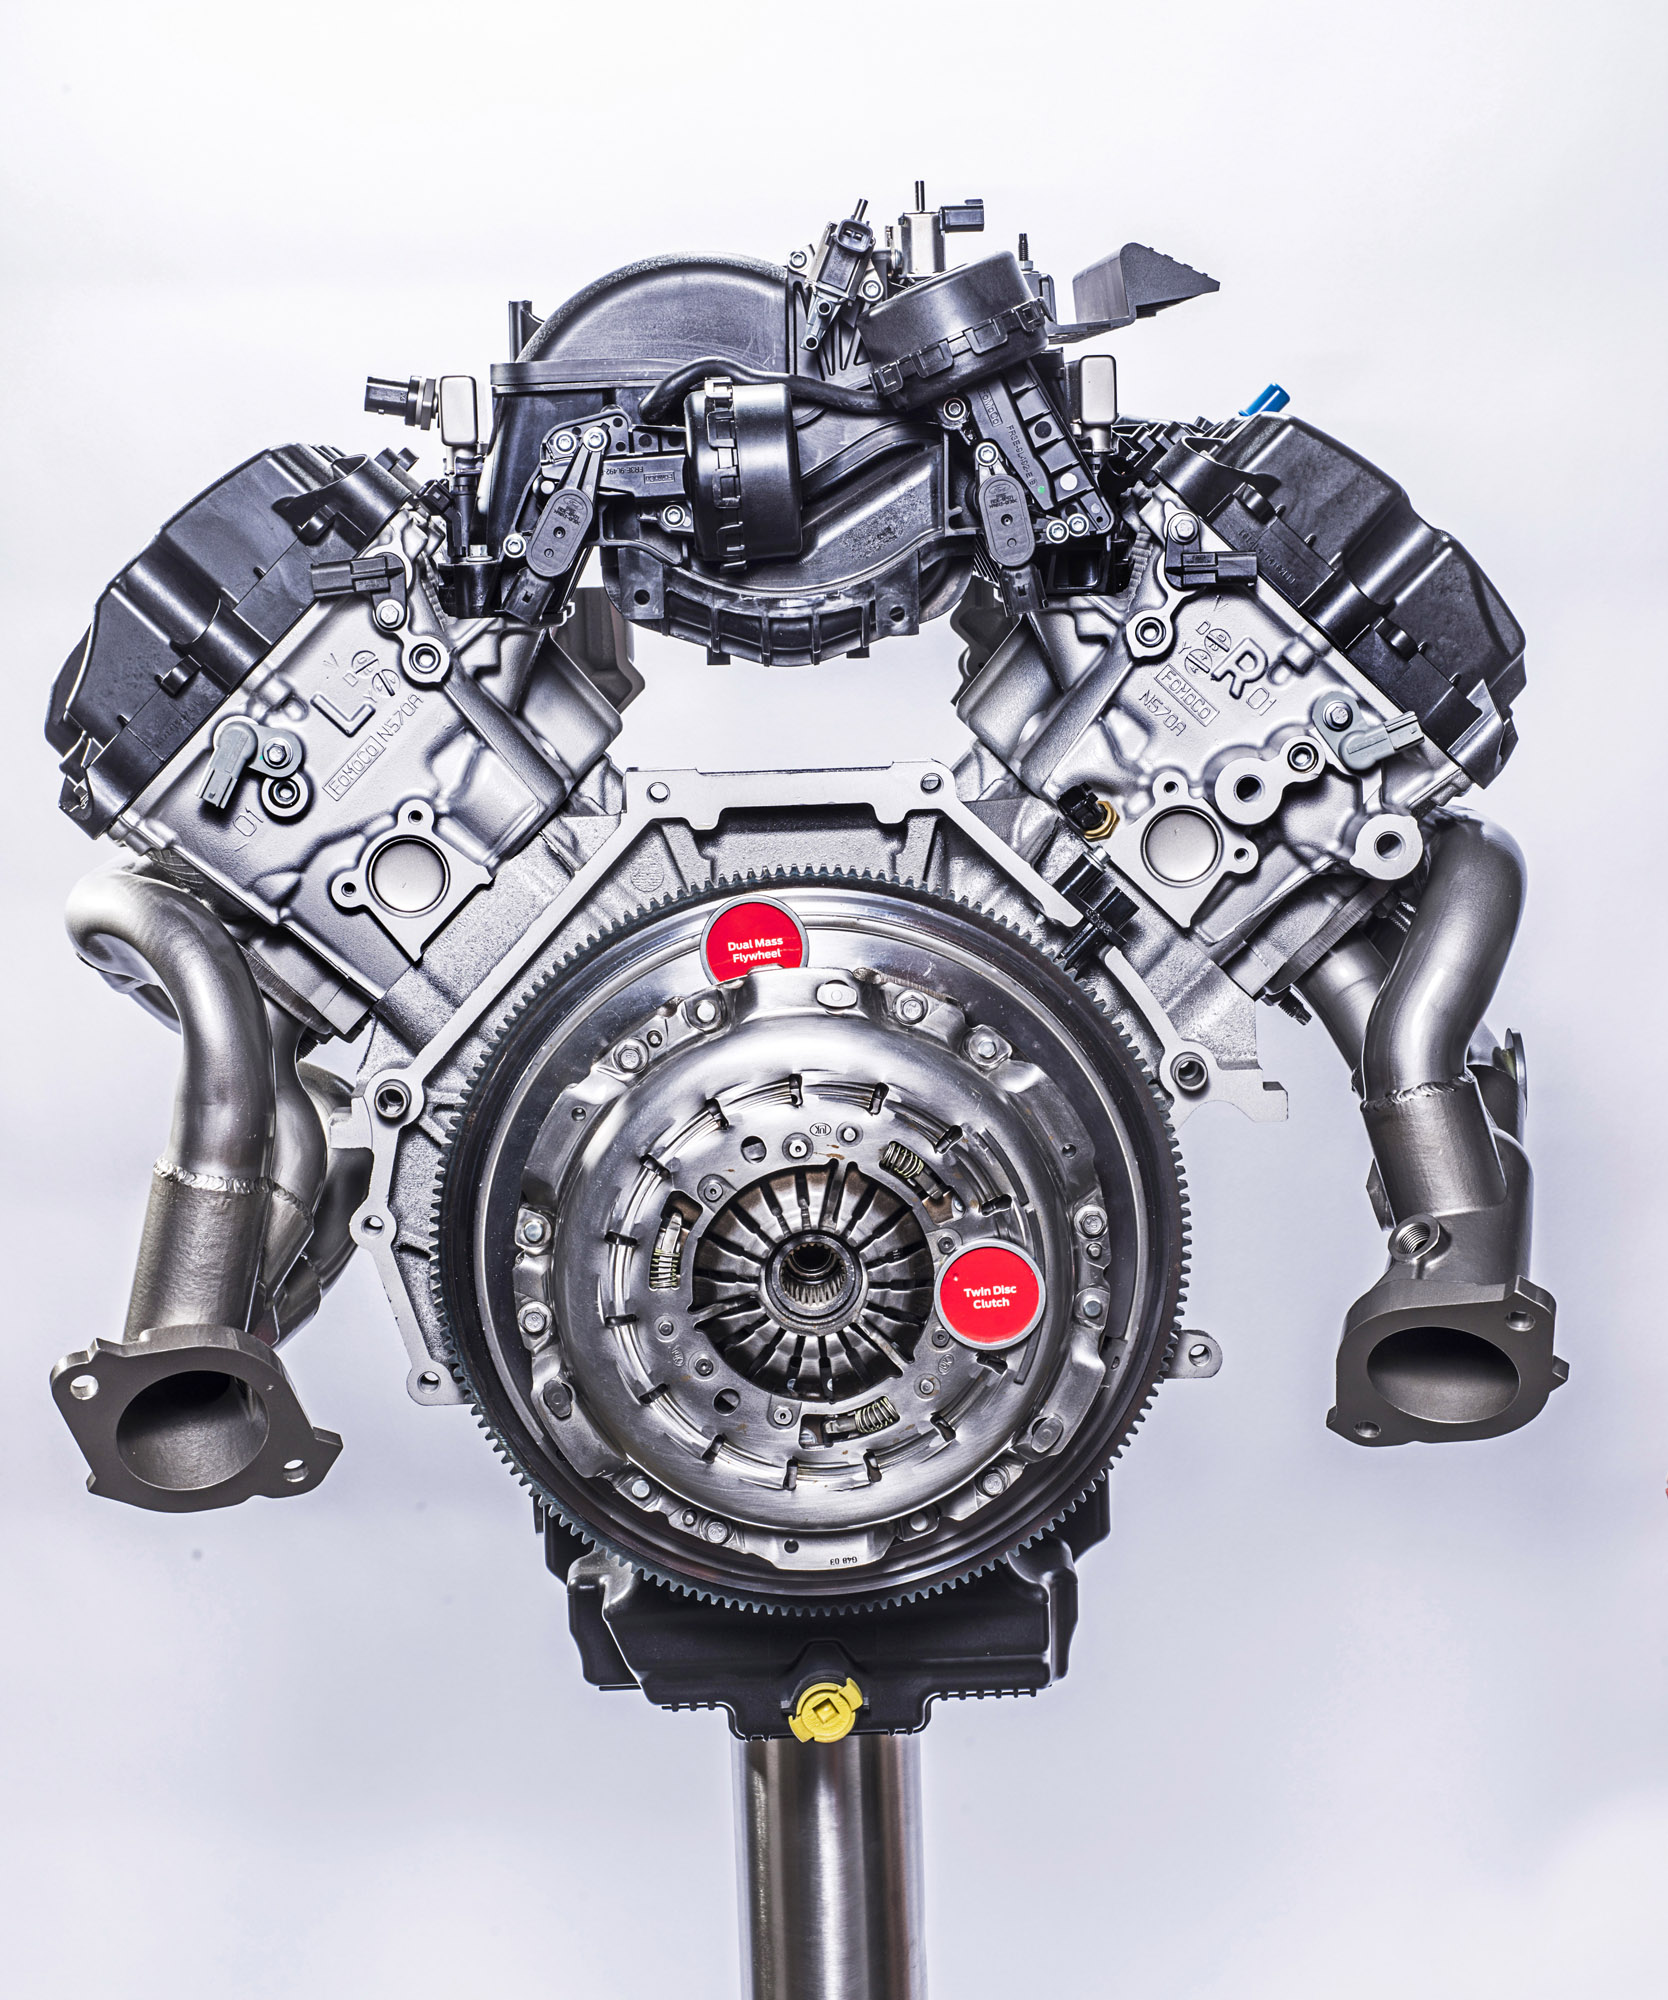 Ford 5-2-liter V8 Engine